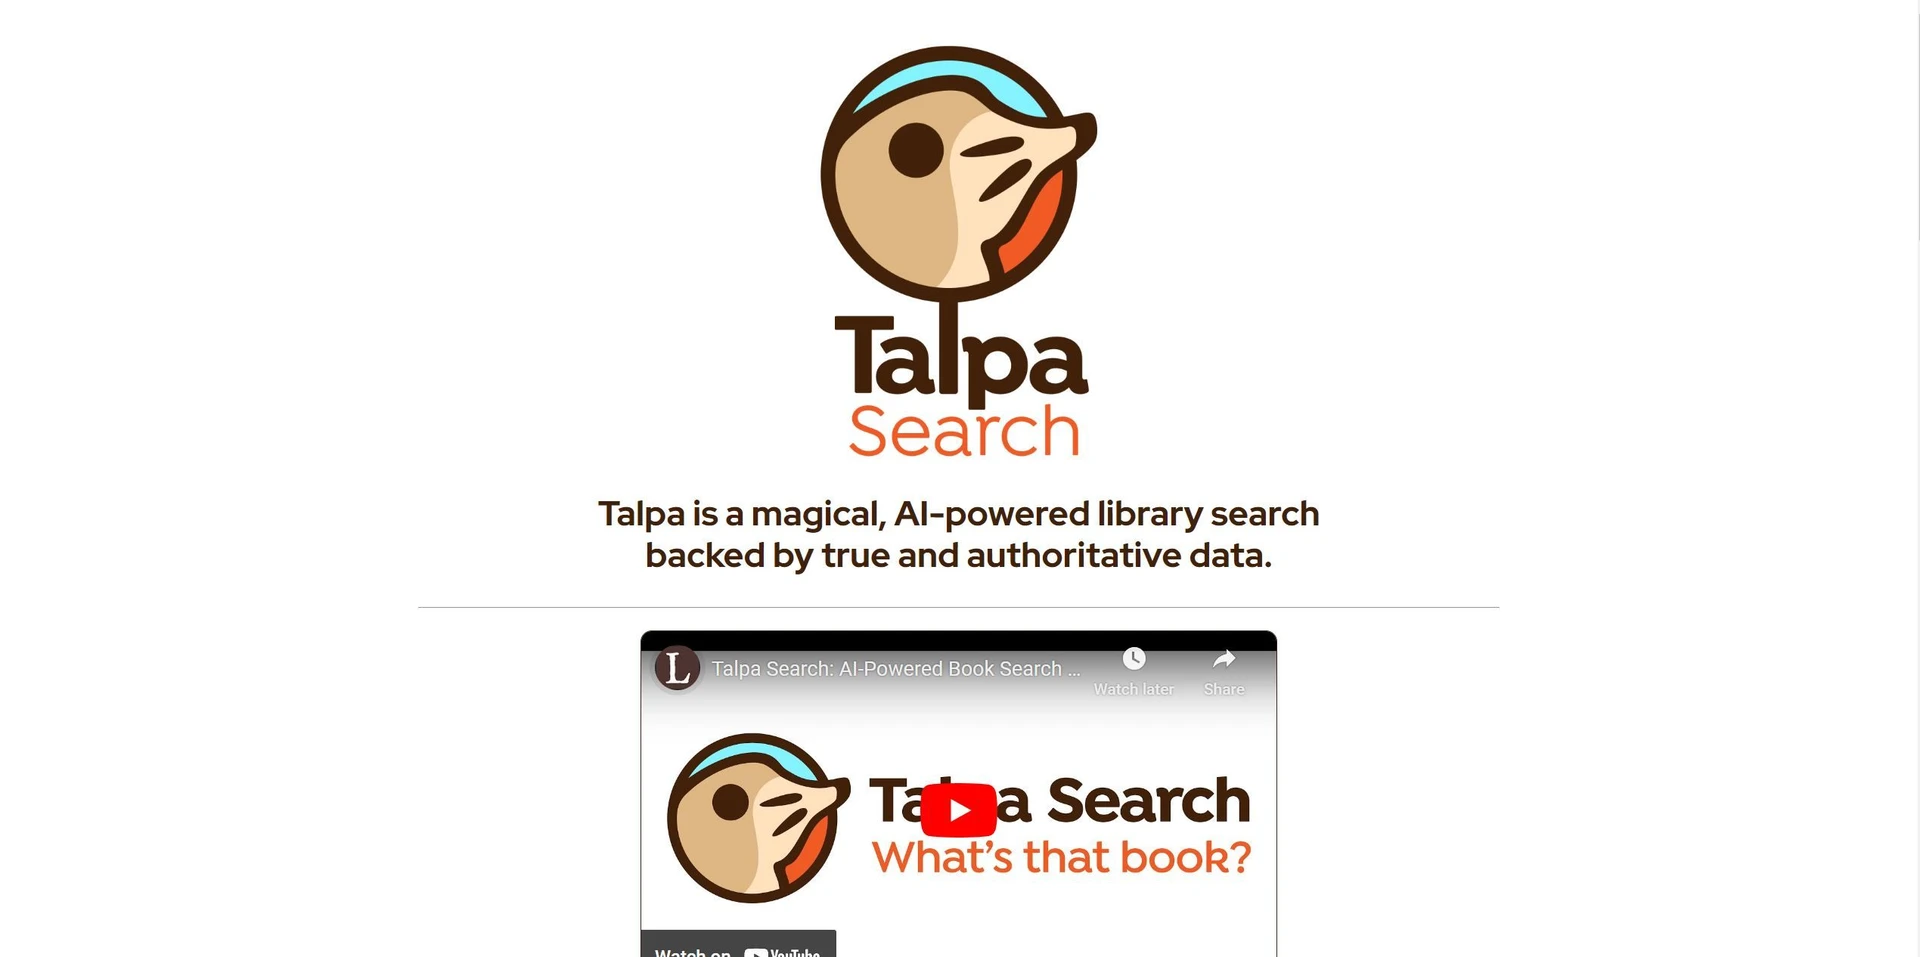 Talpawebsite picture